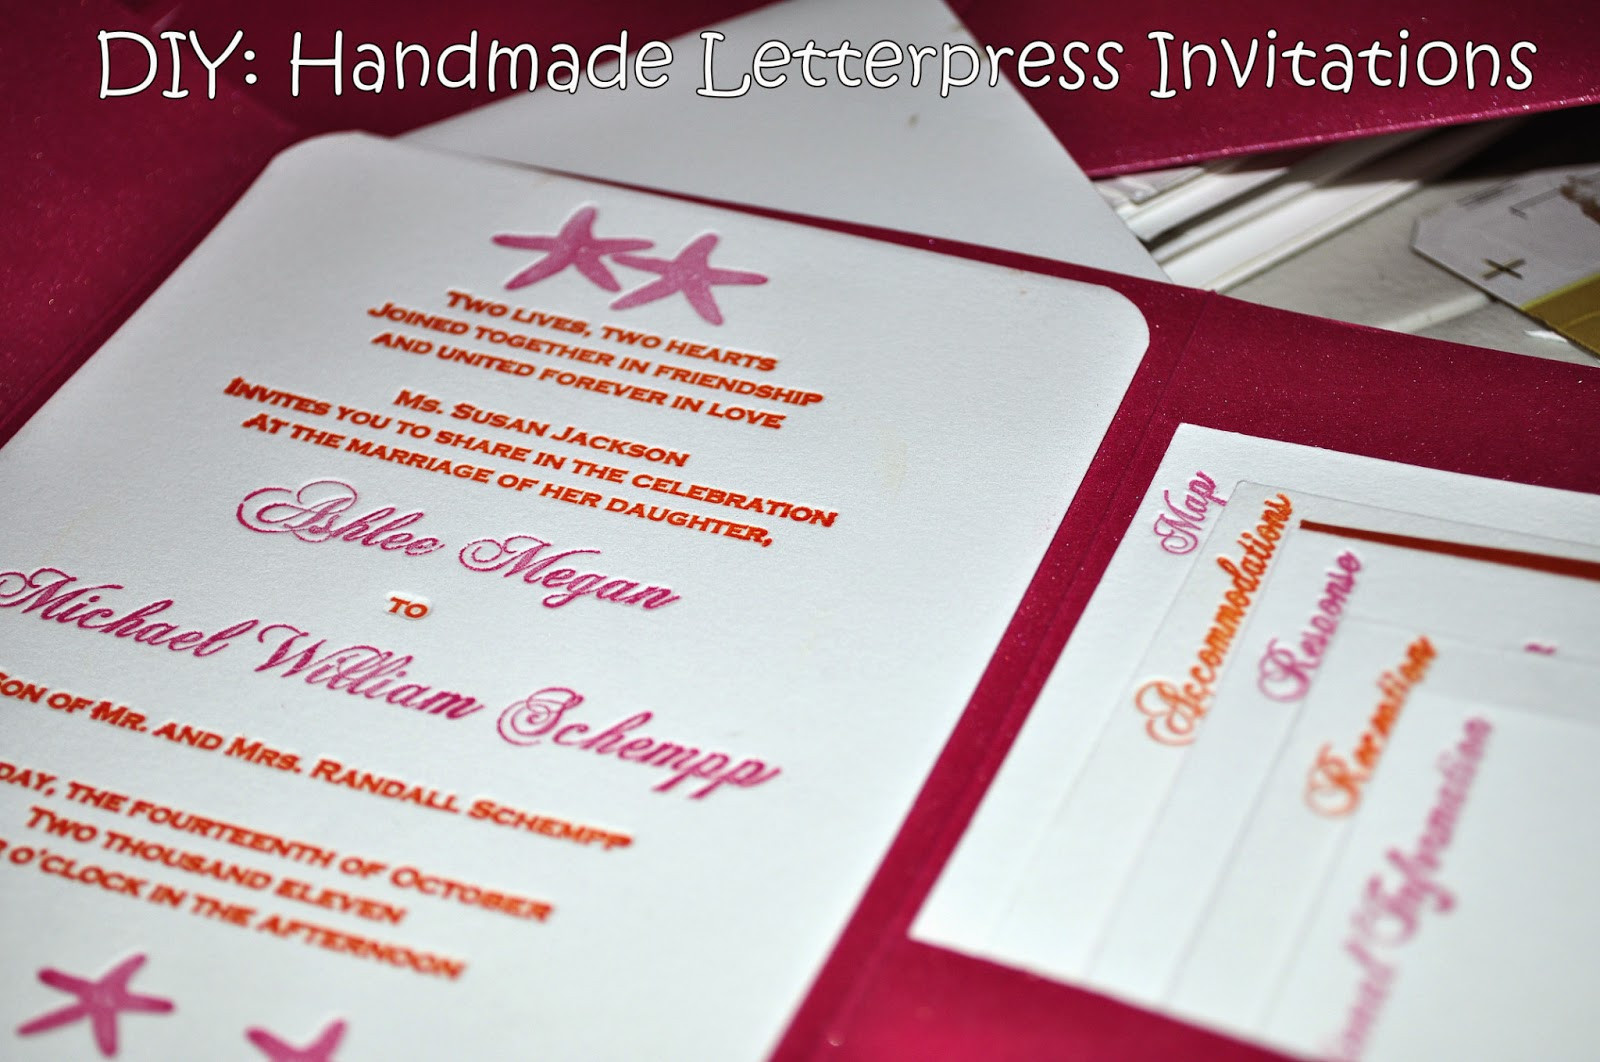 Diy Letterpress Wedding Invitations
 The Glitter Mouse DIY Handmade Letterpress Wedding